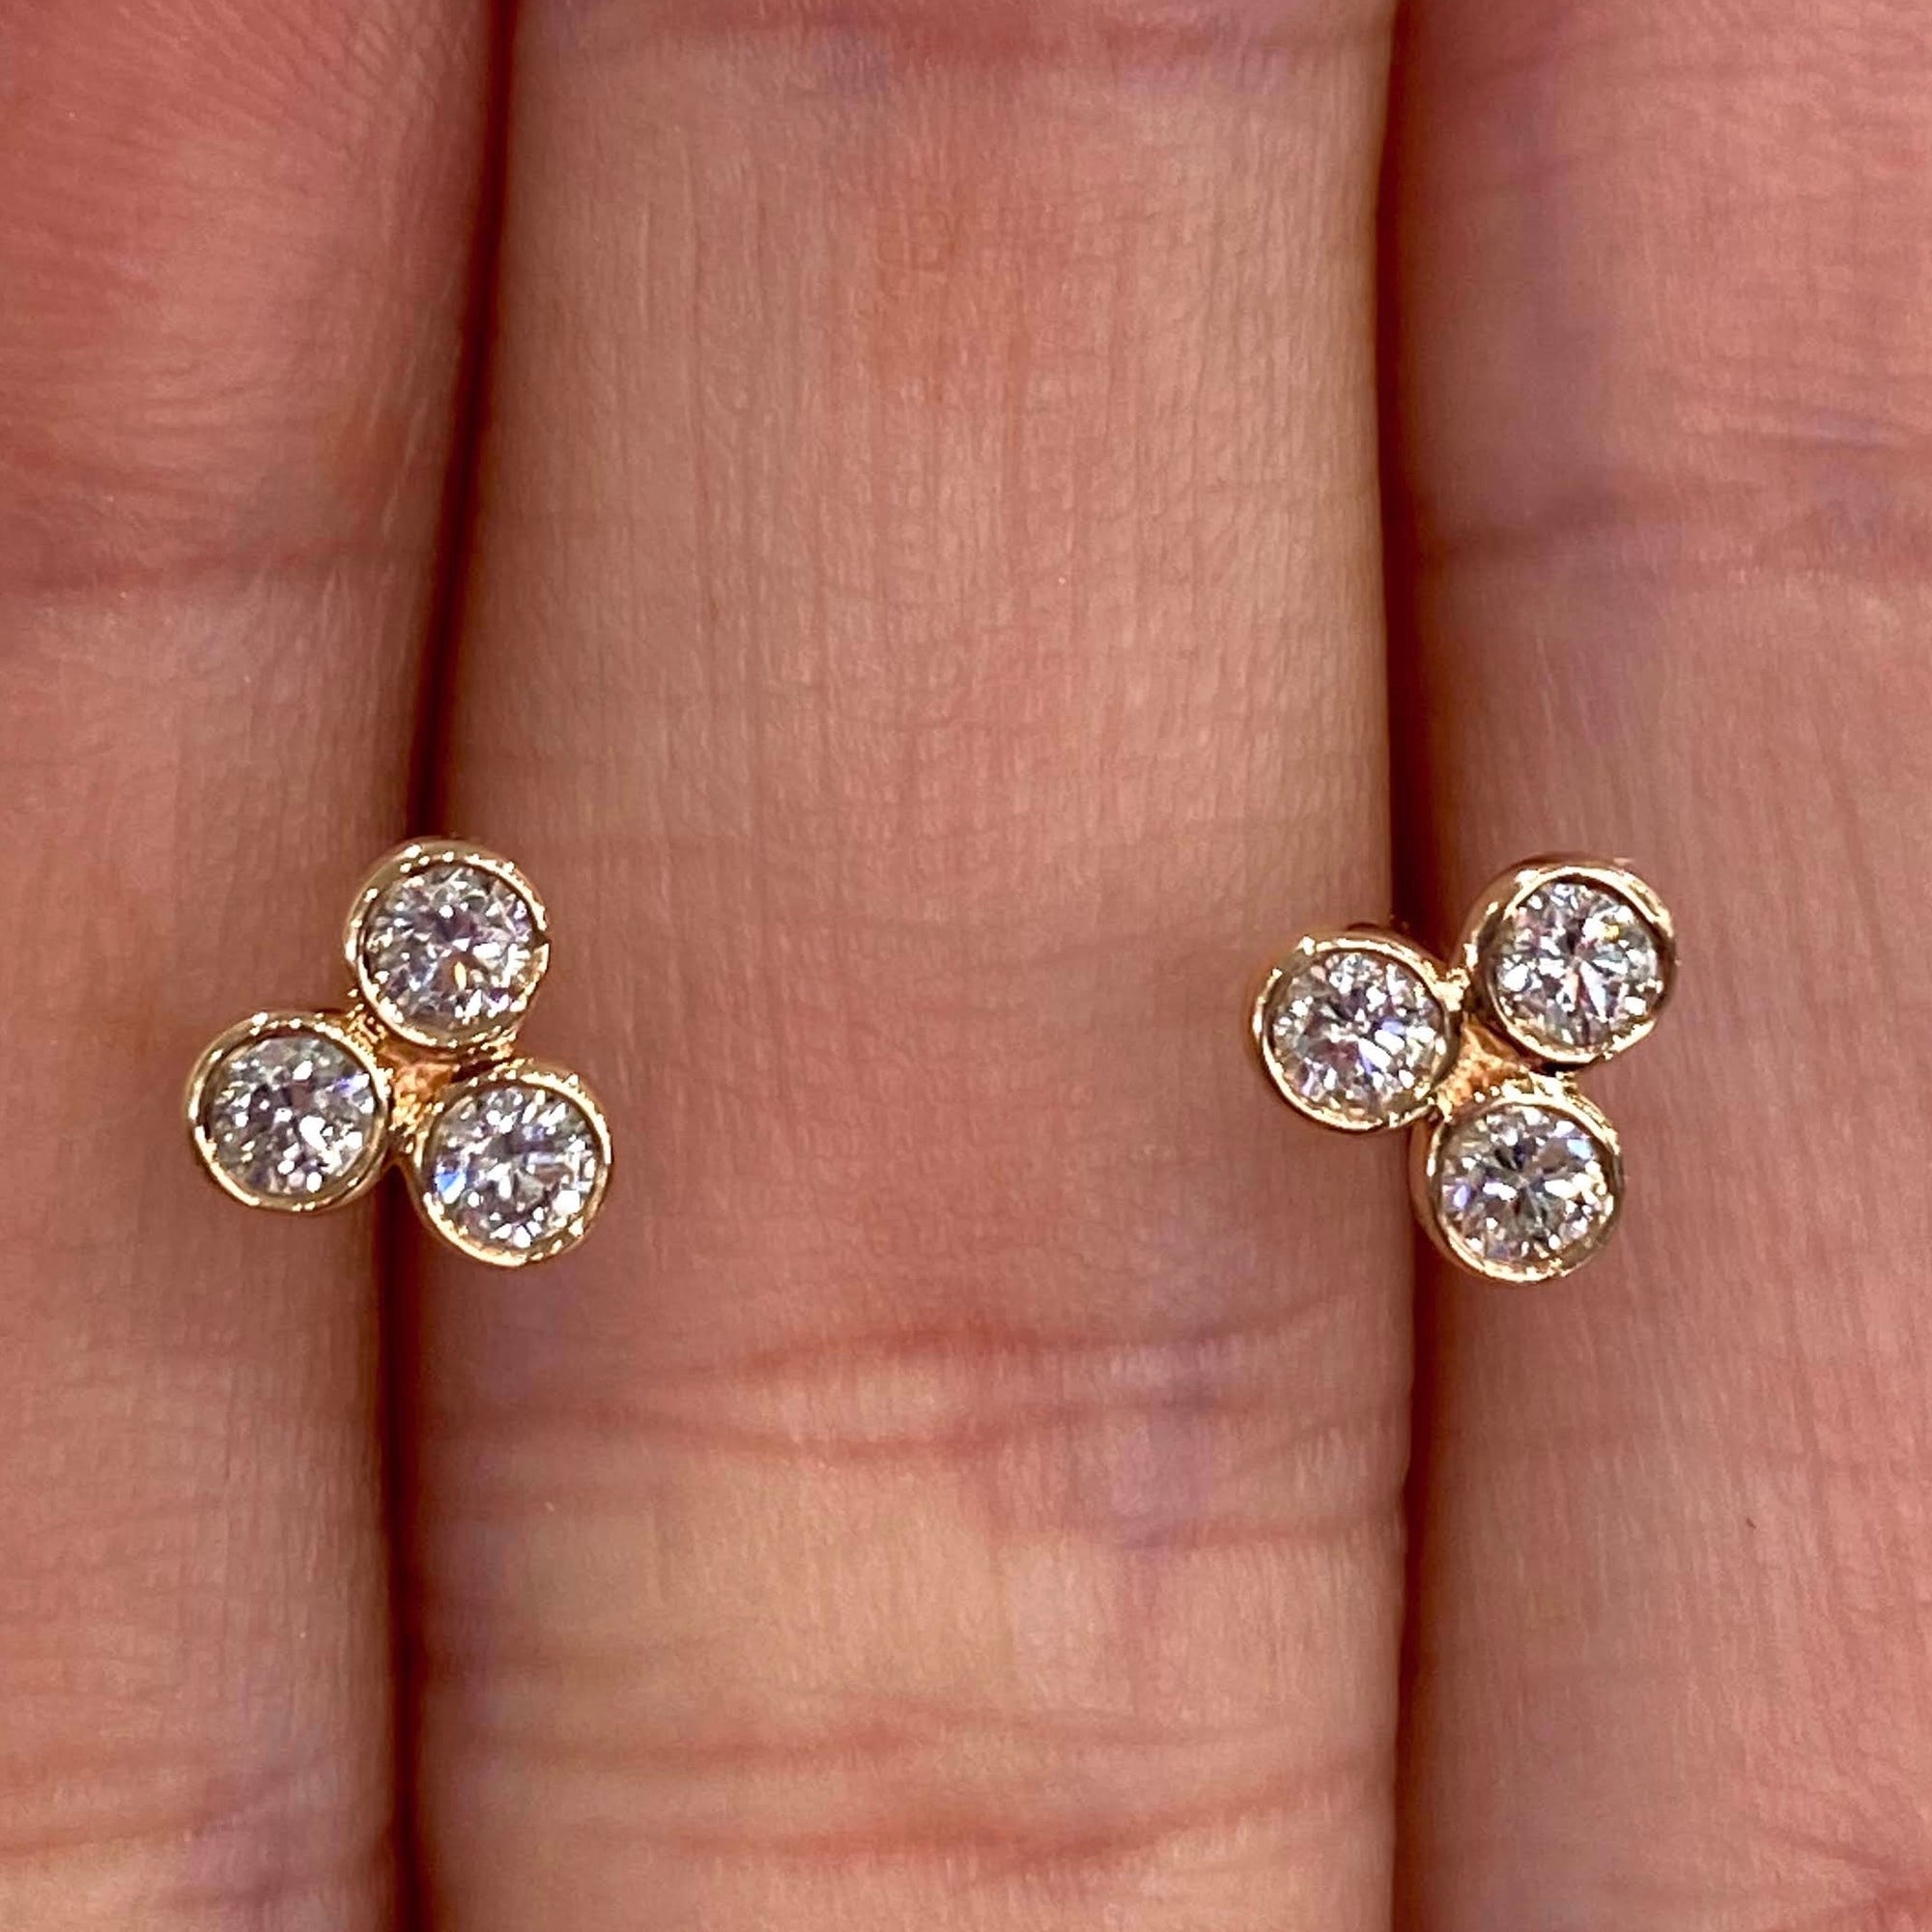 Diamond Bezel-Set Tri Stud Earrings in 14k Rose Gold